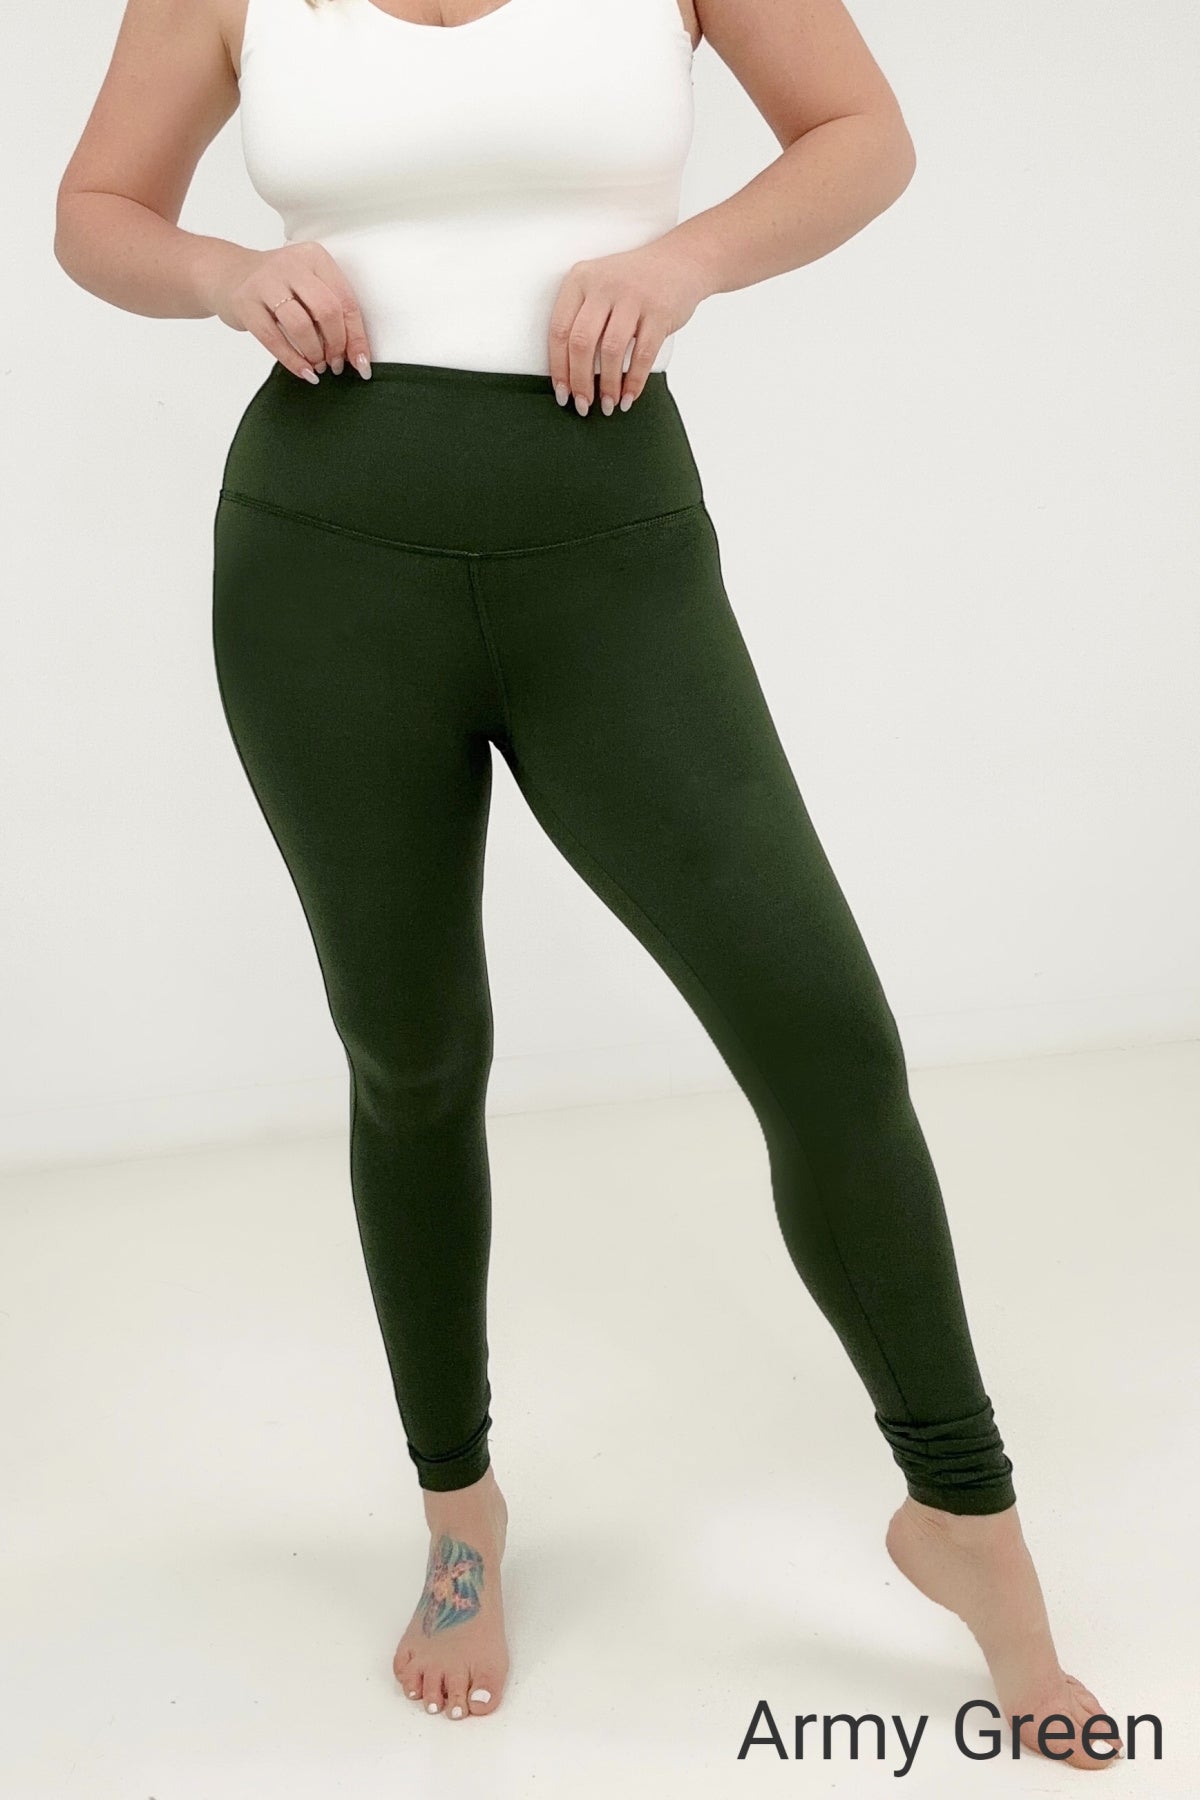 Zenana Premium Cotton Full Ankle Length Womens Basic Leggings - Multiple  Solid Colors Sizes S-3X 